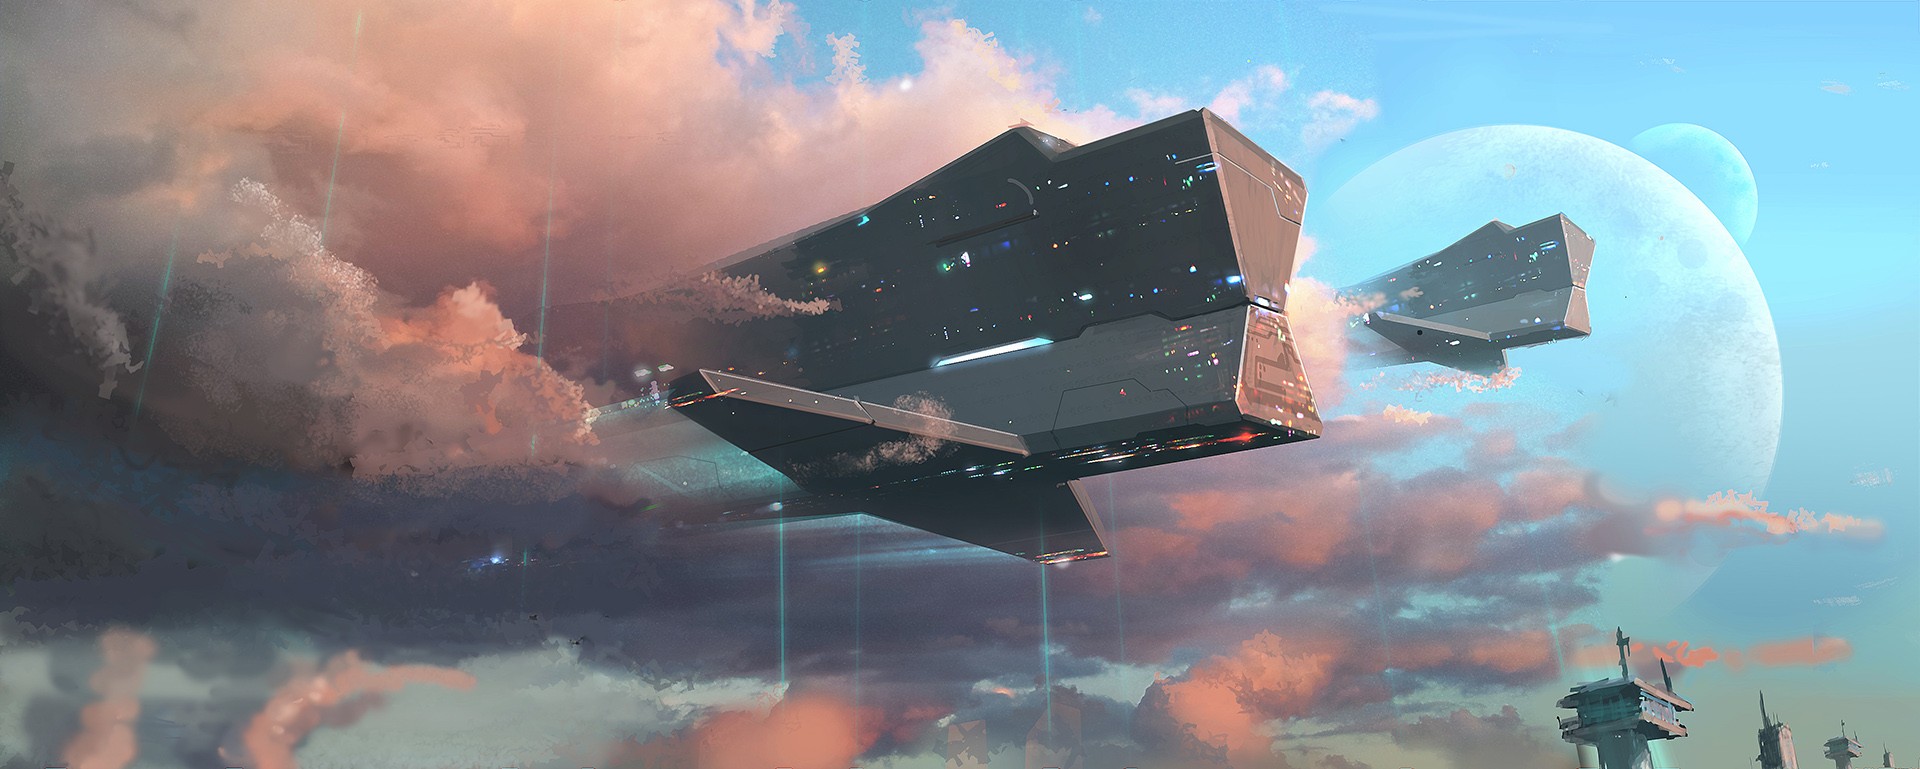 General 1920x769 spaceship futuristic science fiction space art artwork vehicle sky